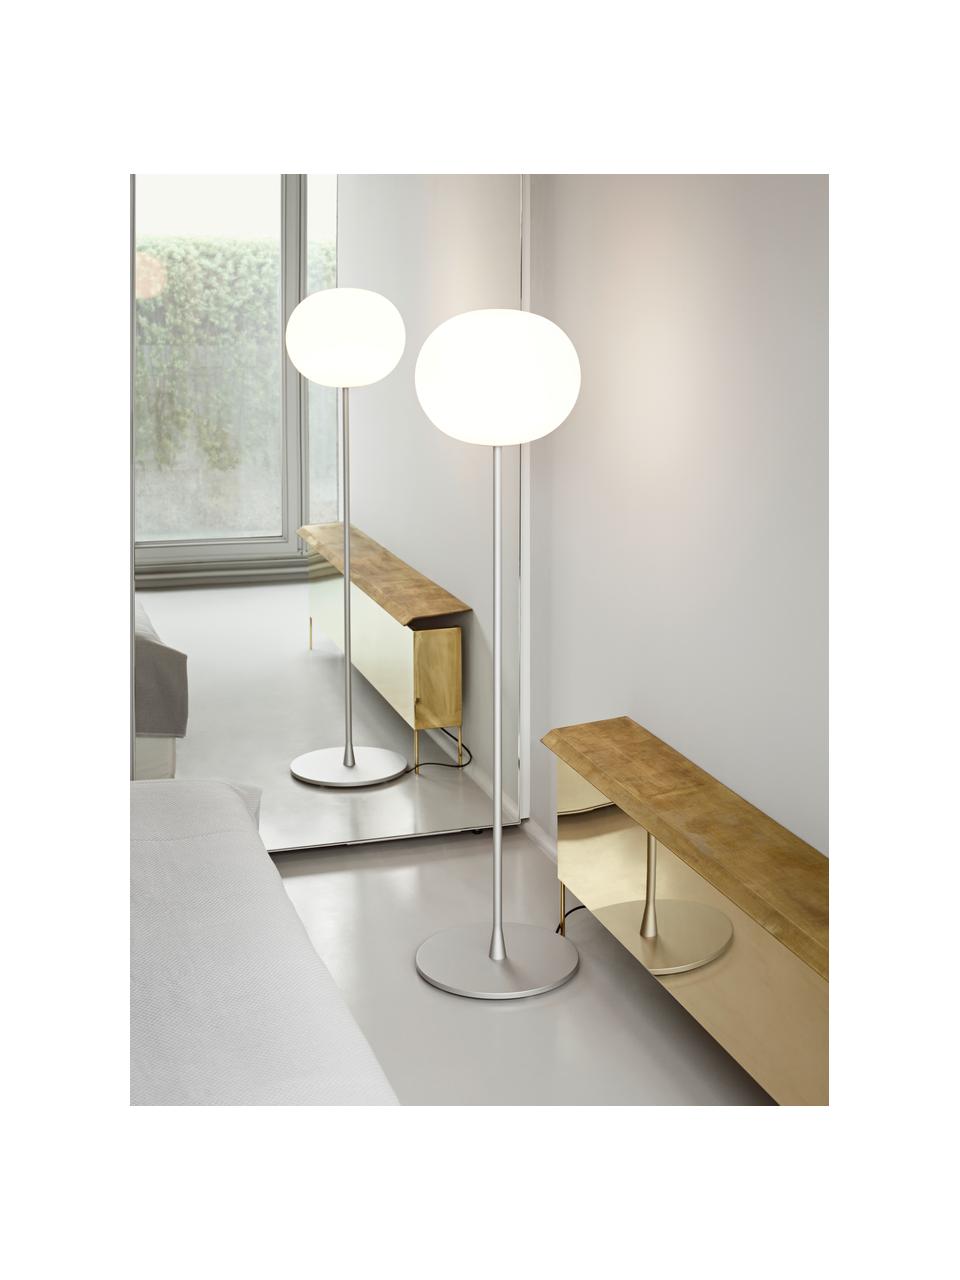 Lámpara de pie regulable Glo-Ball, Pantalla: vidrio, Estructura: acero, aluminio recubiert, Cable: plástico, Plateado, Al 135 cm